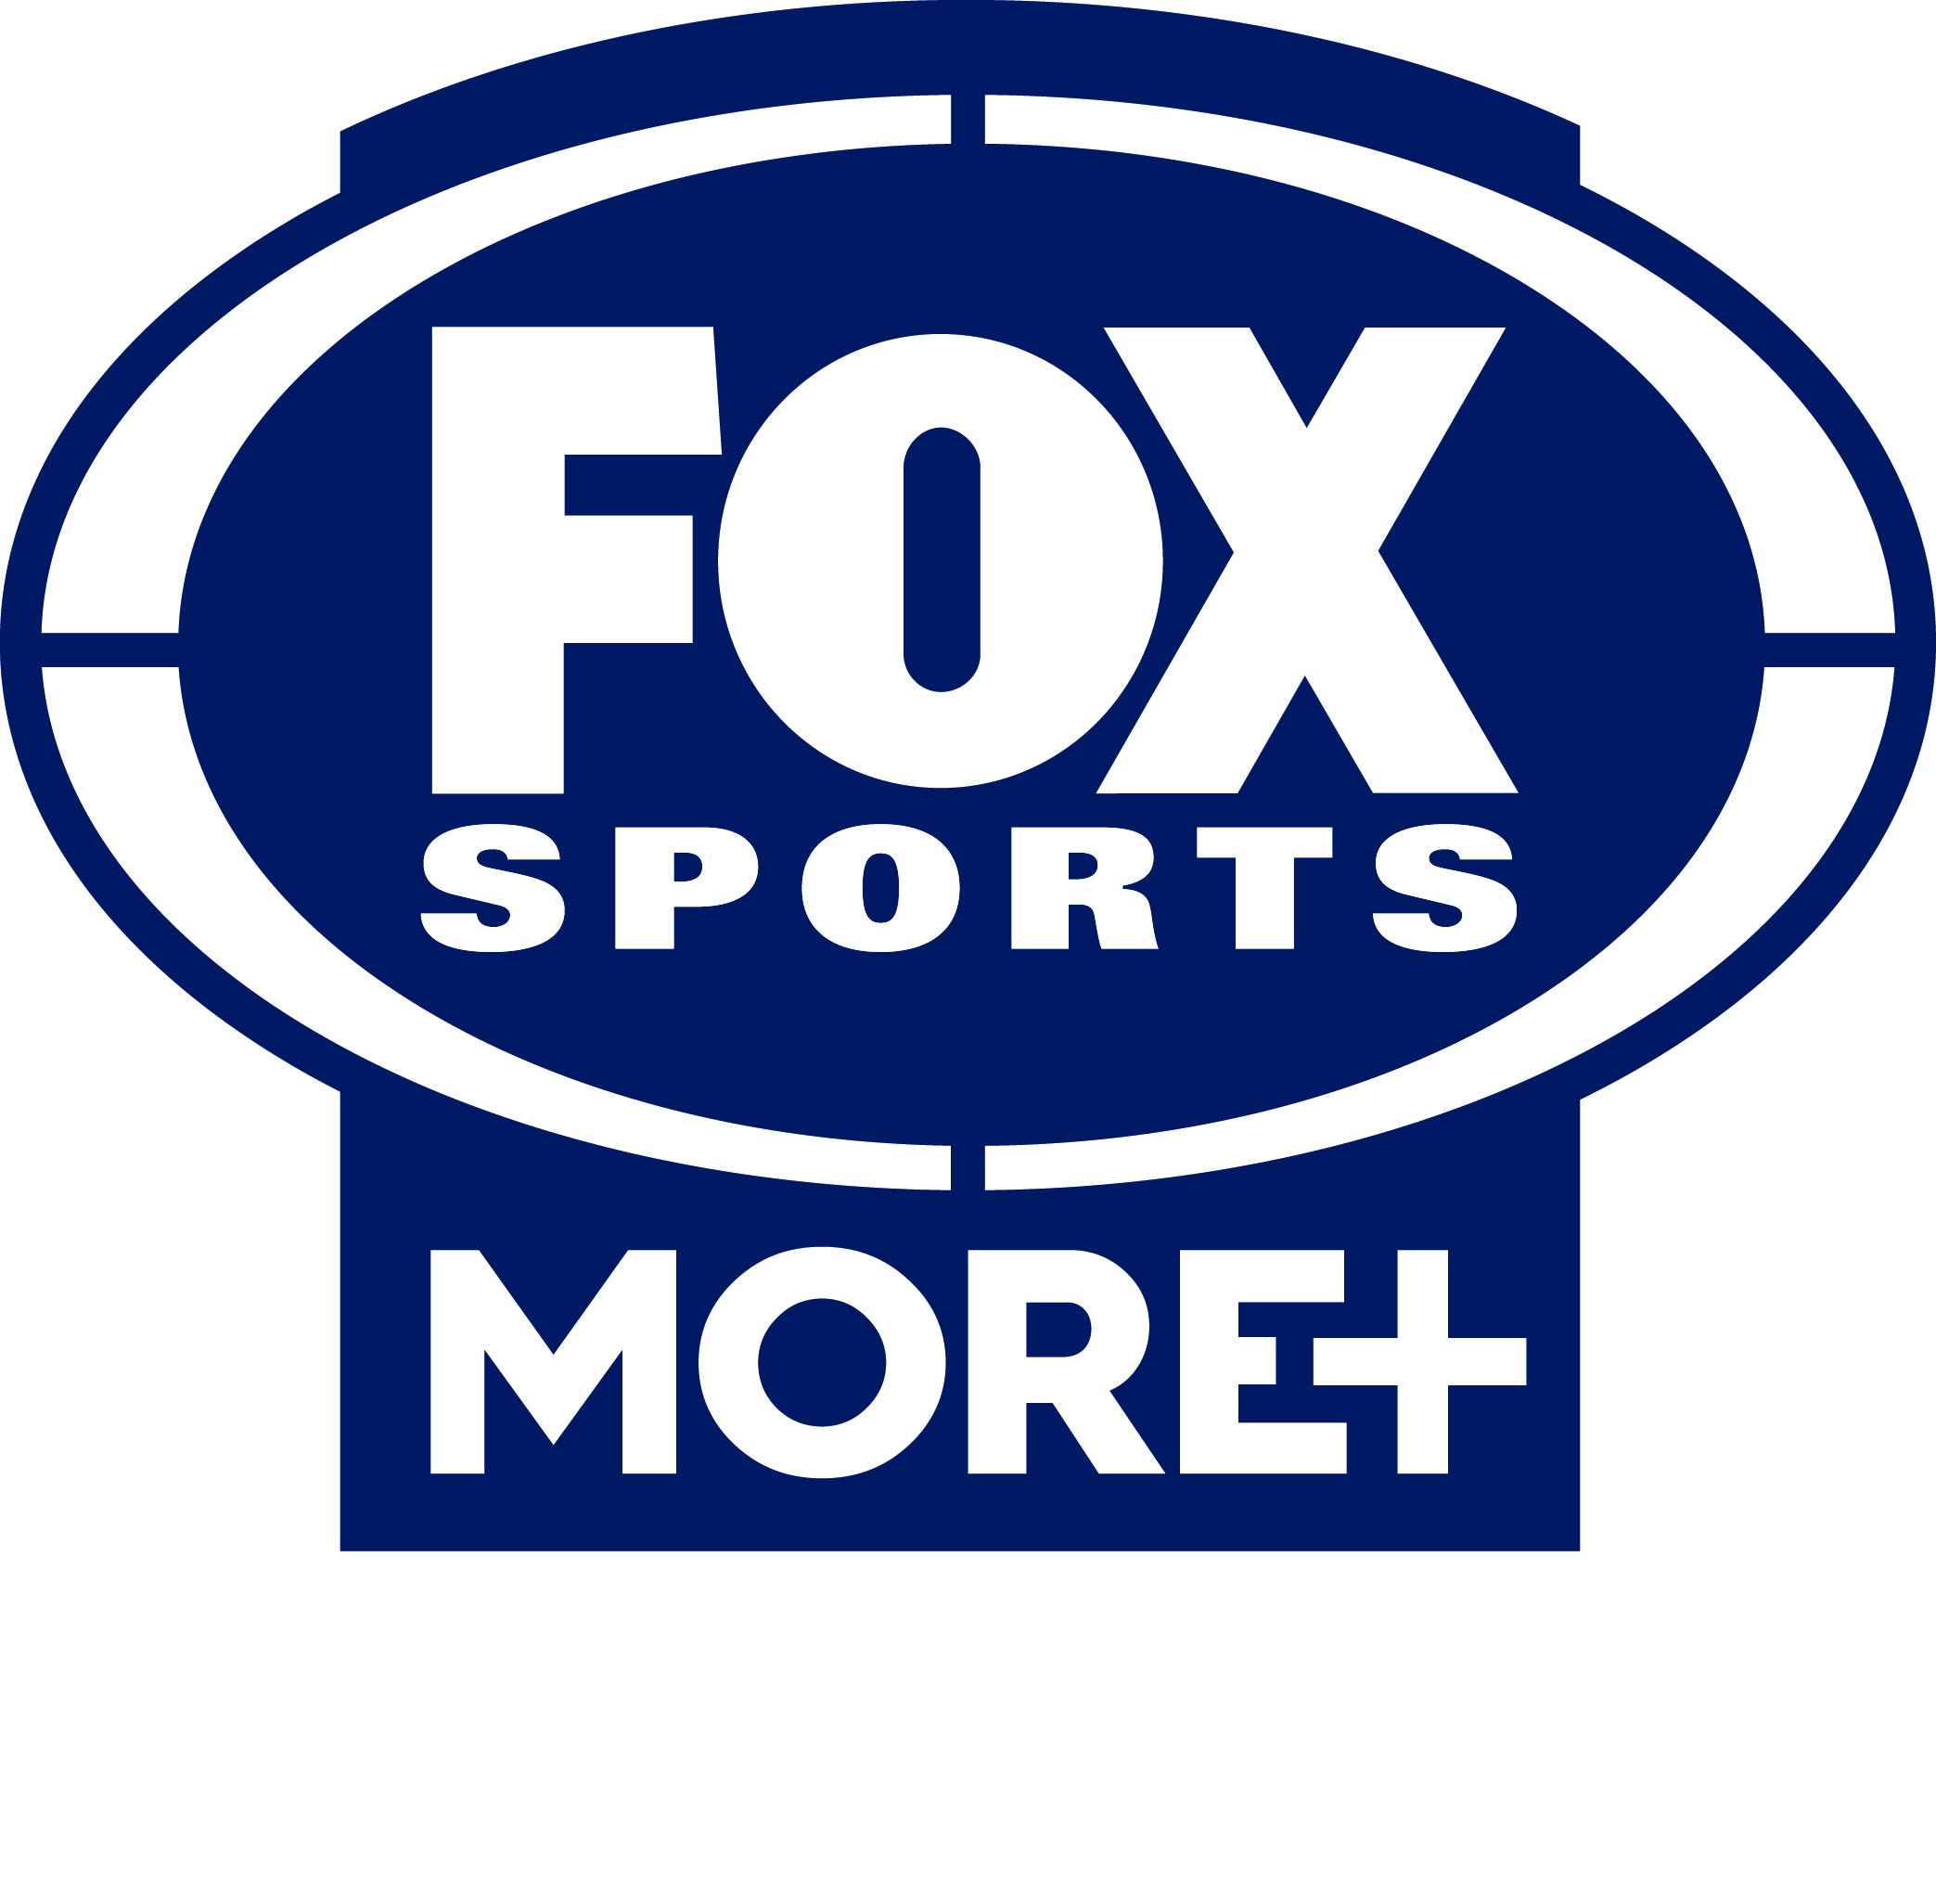 Fox sports plus logo